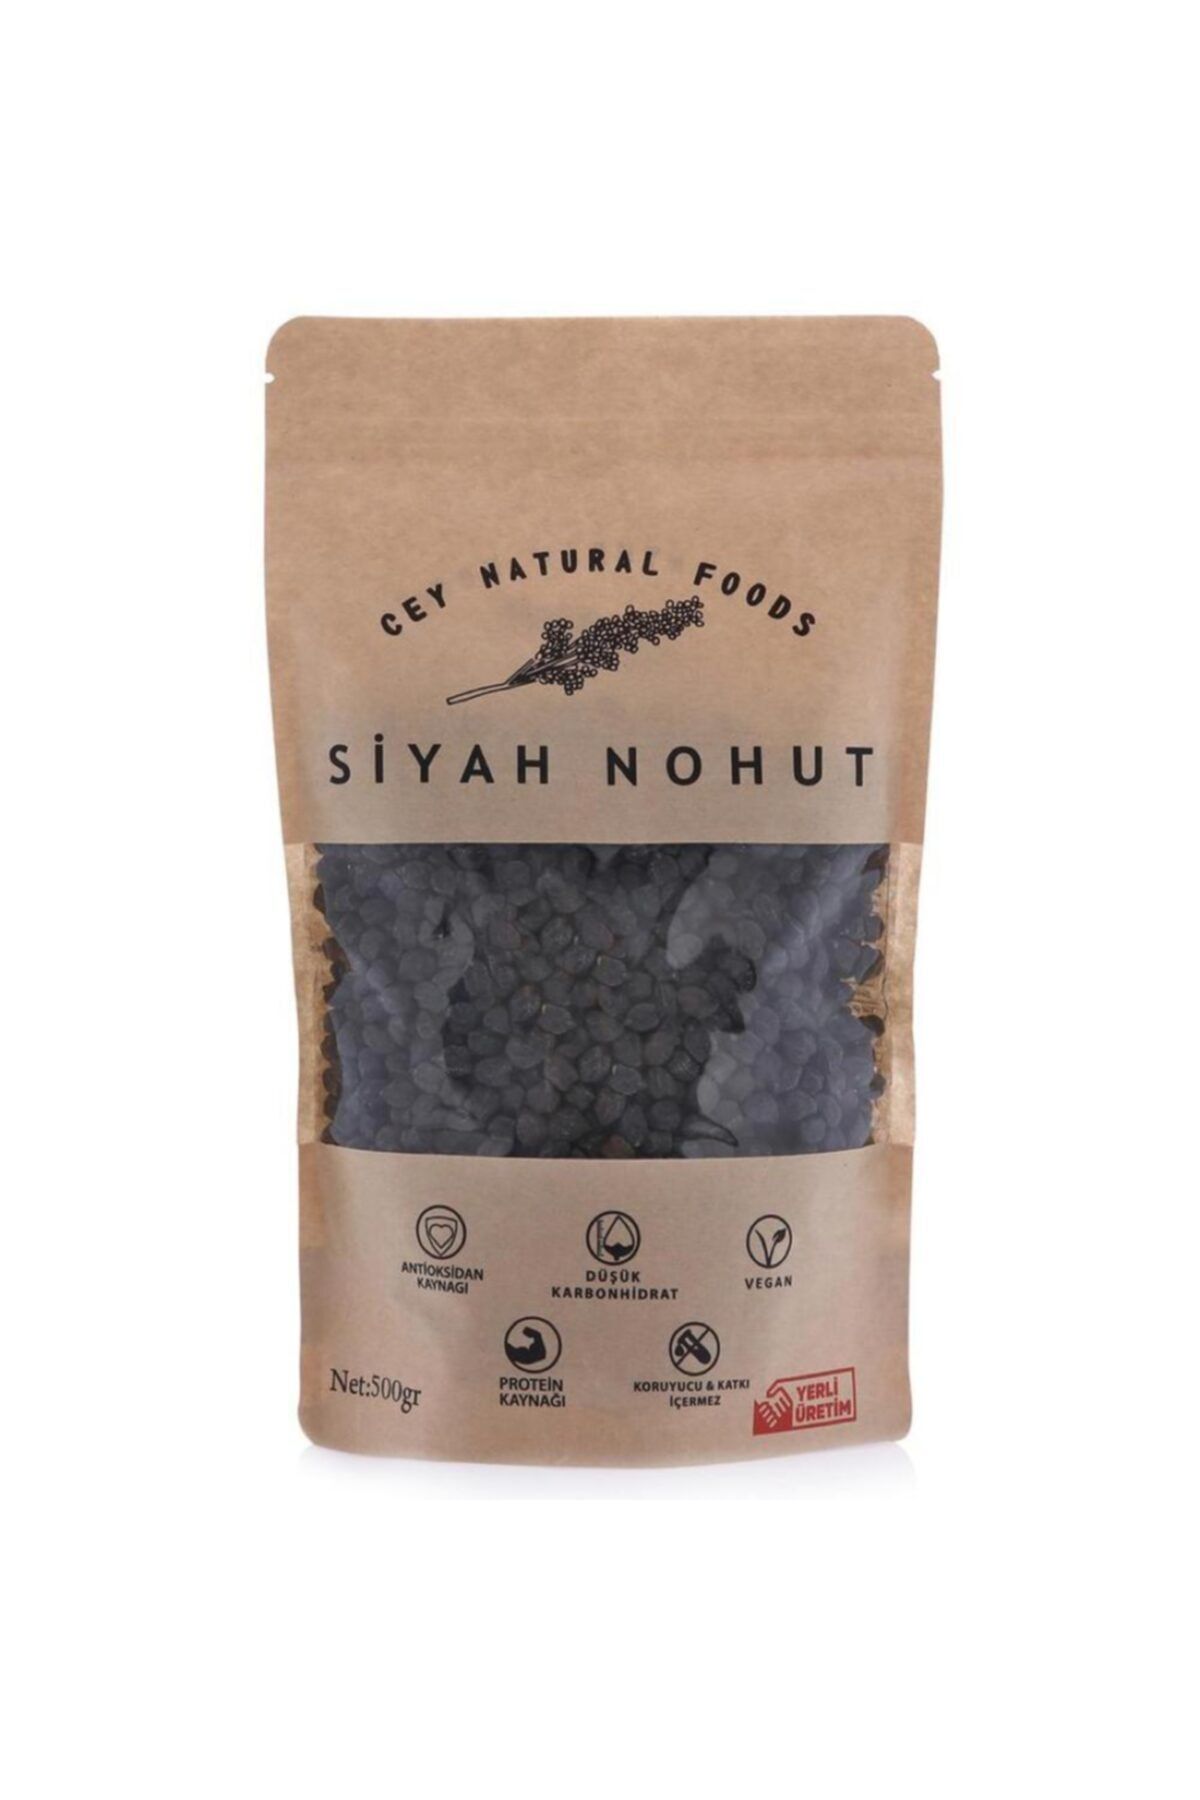 Cey Natural Foods Siyah Nohut